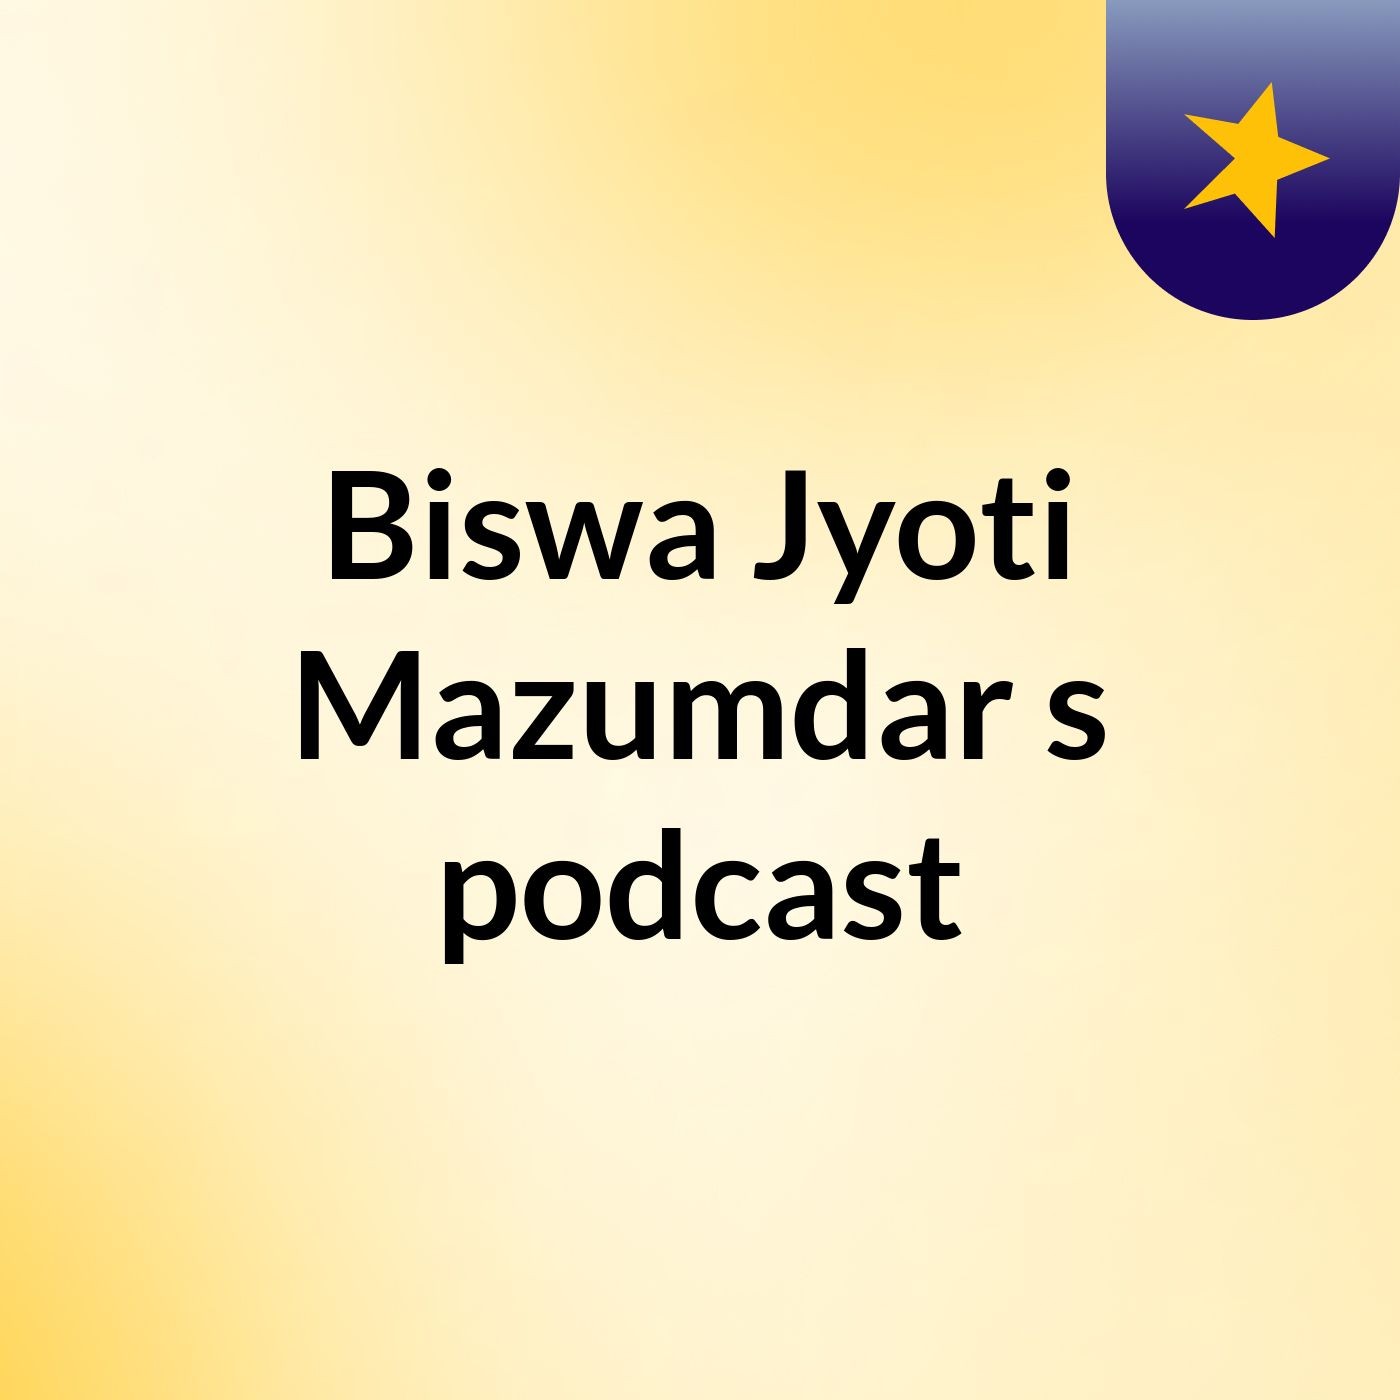 Biswa Jyoti Mazumdar's podcast